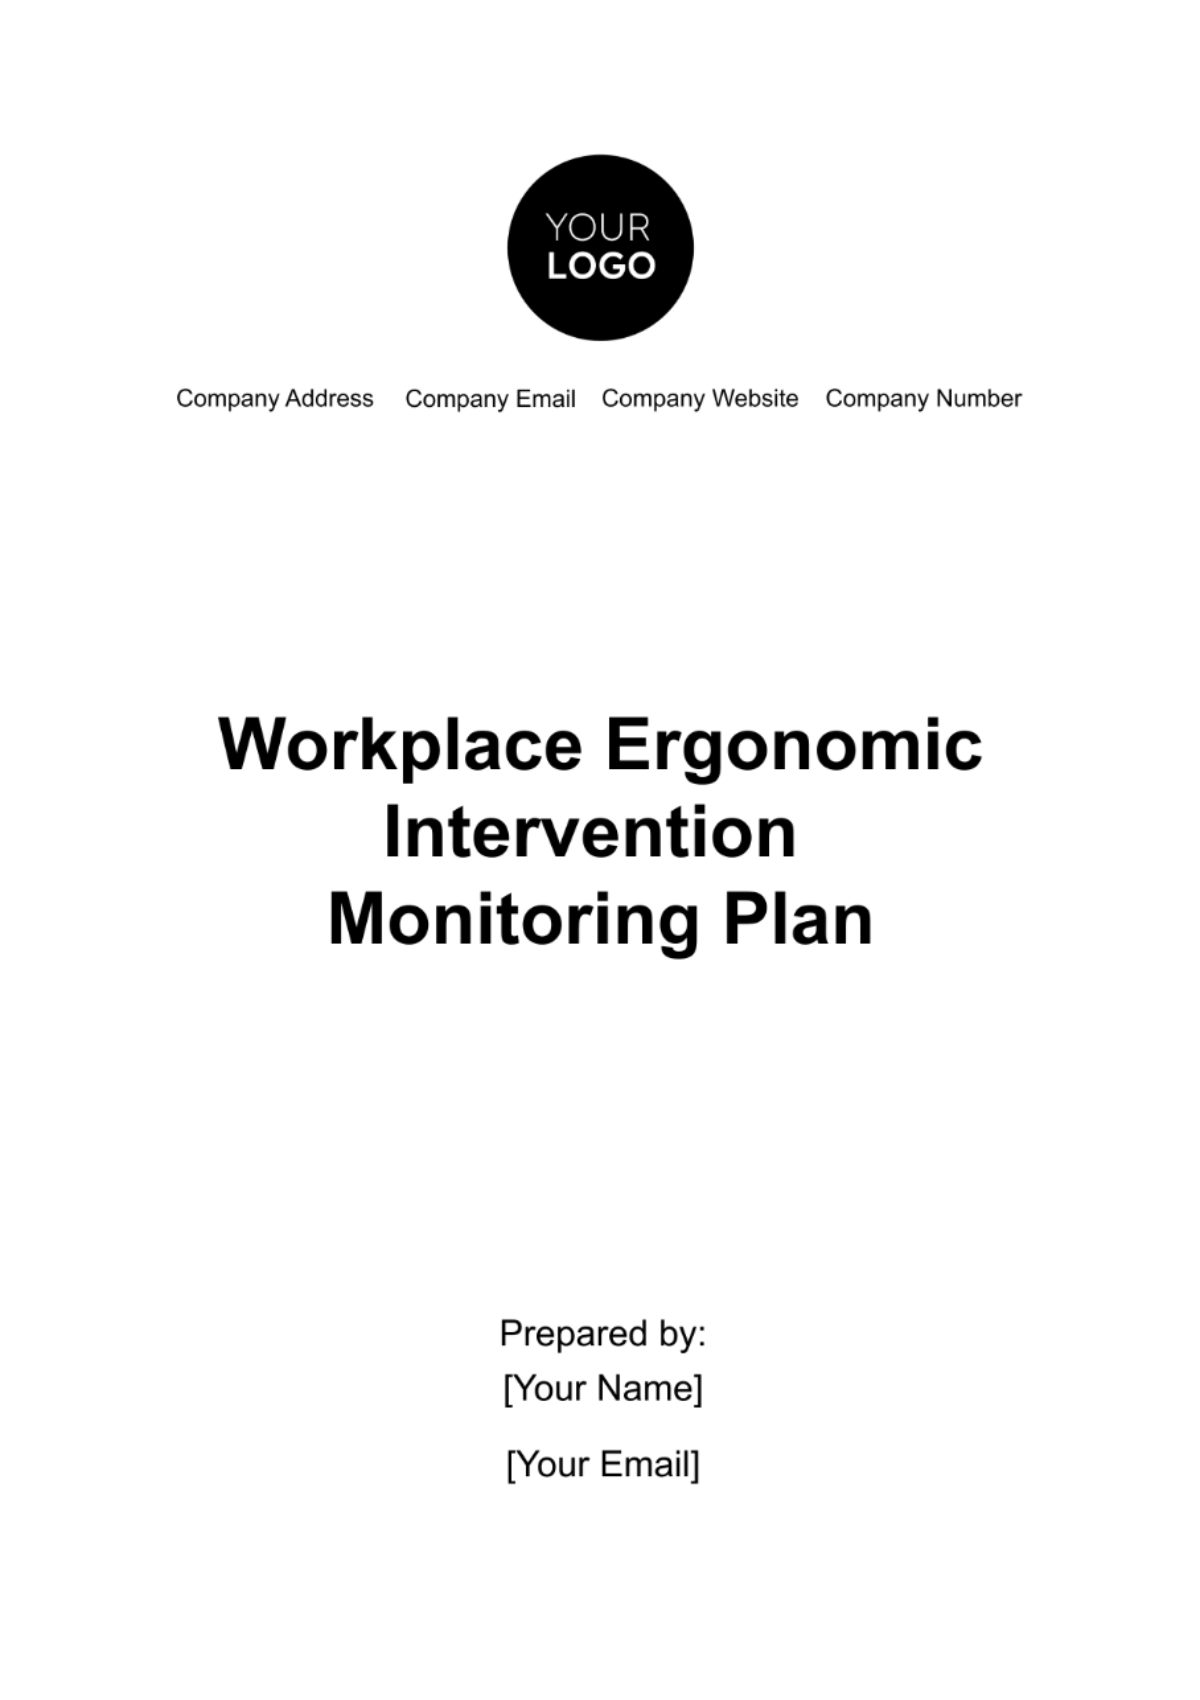 Free Workplace Ergonomic Intervention Monitoring Plan Template